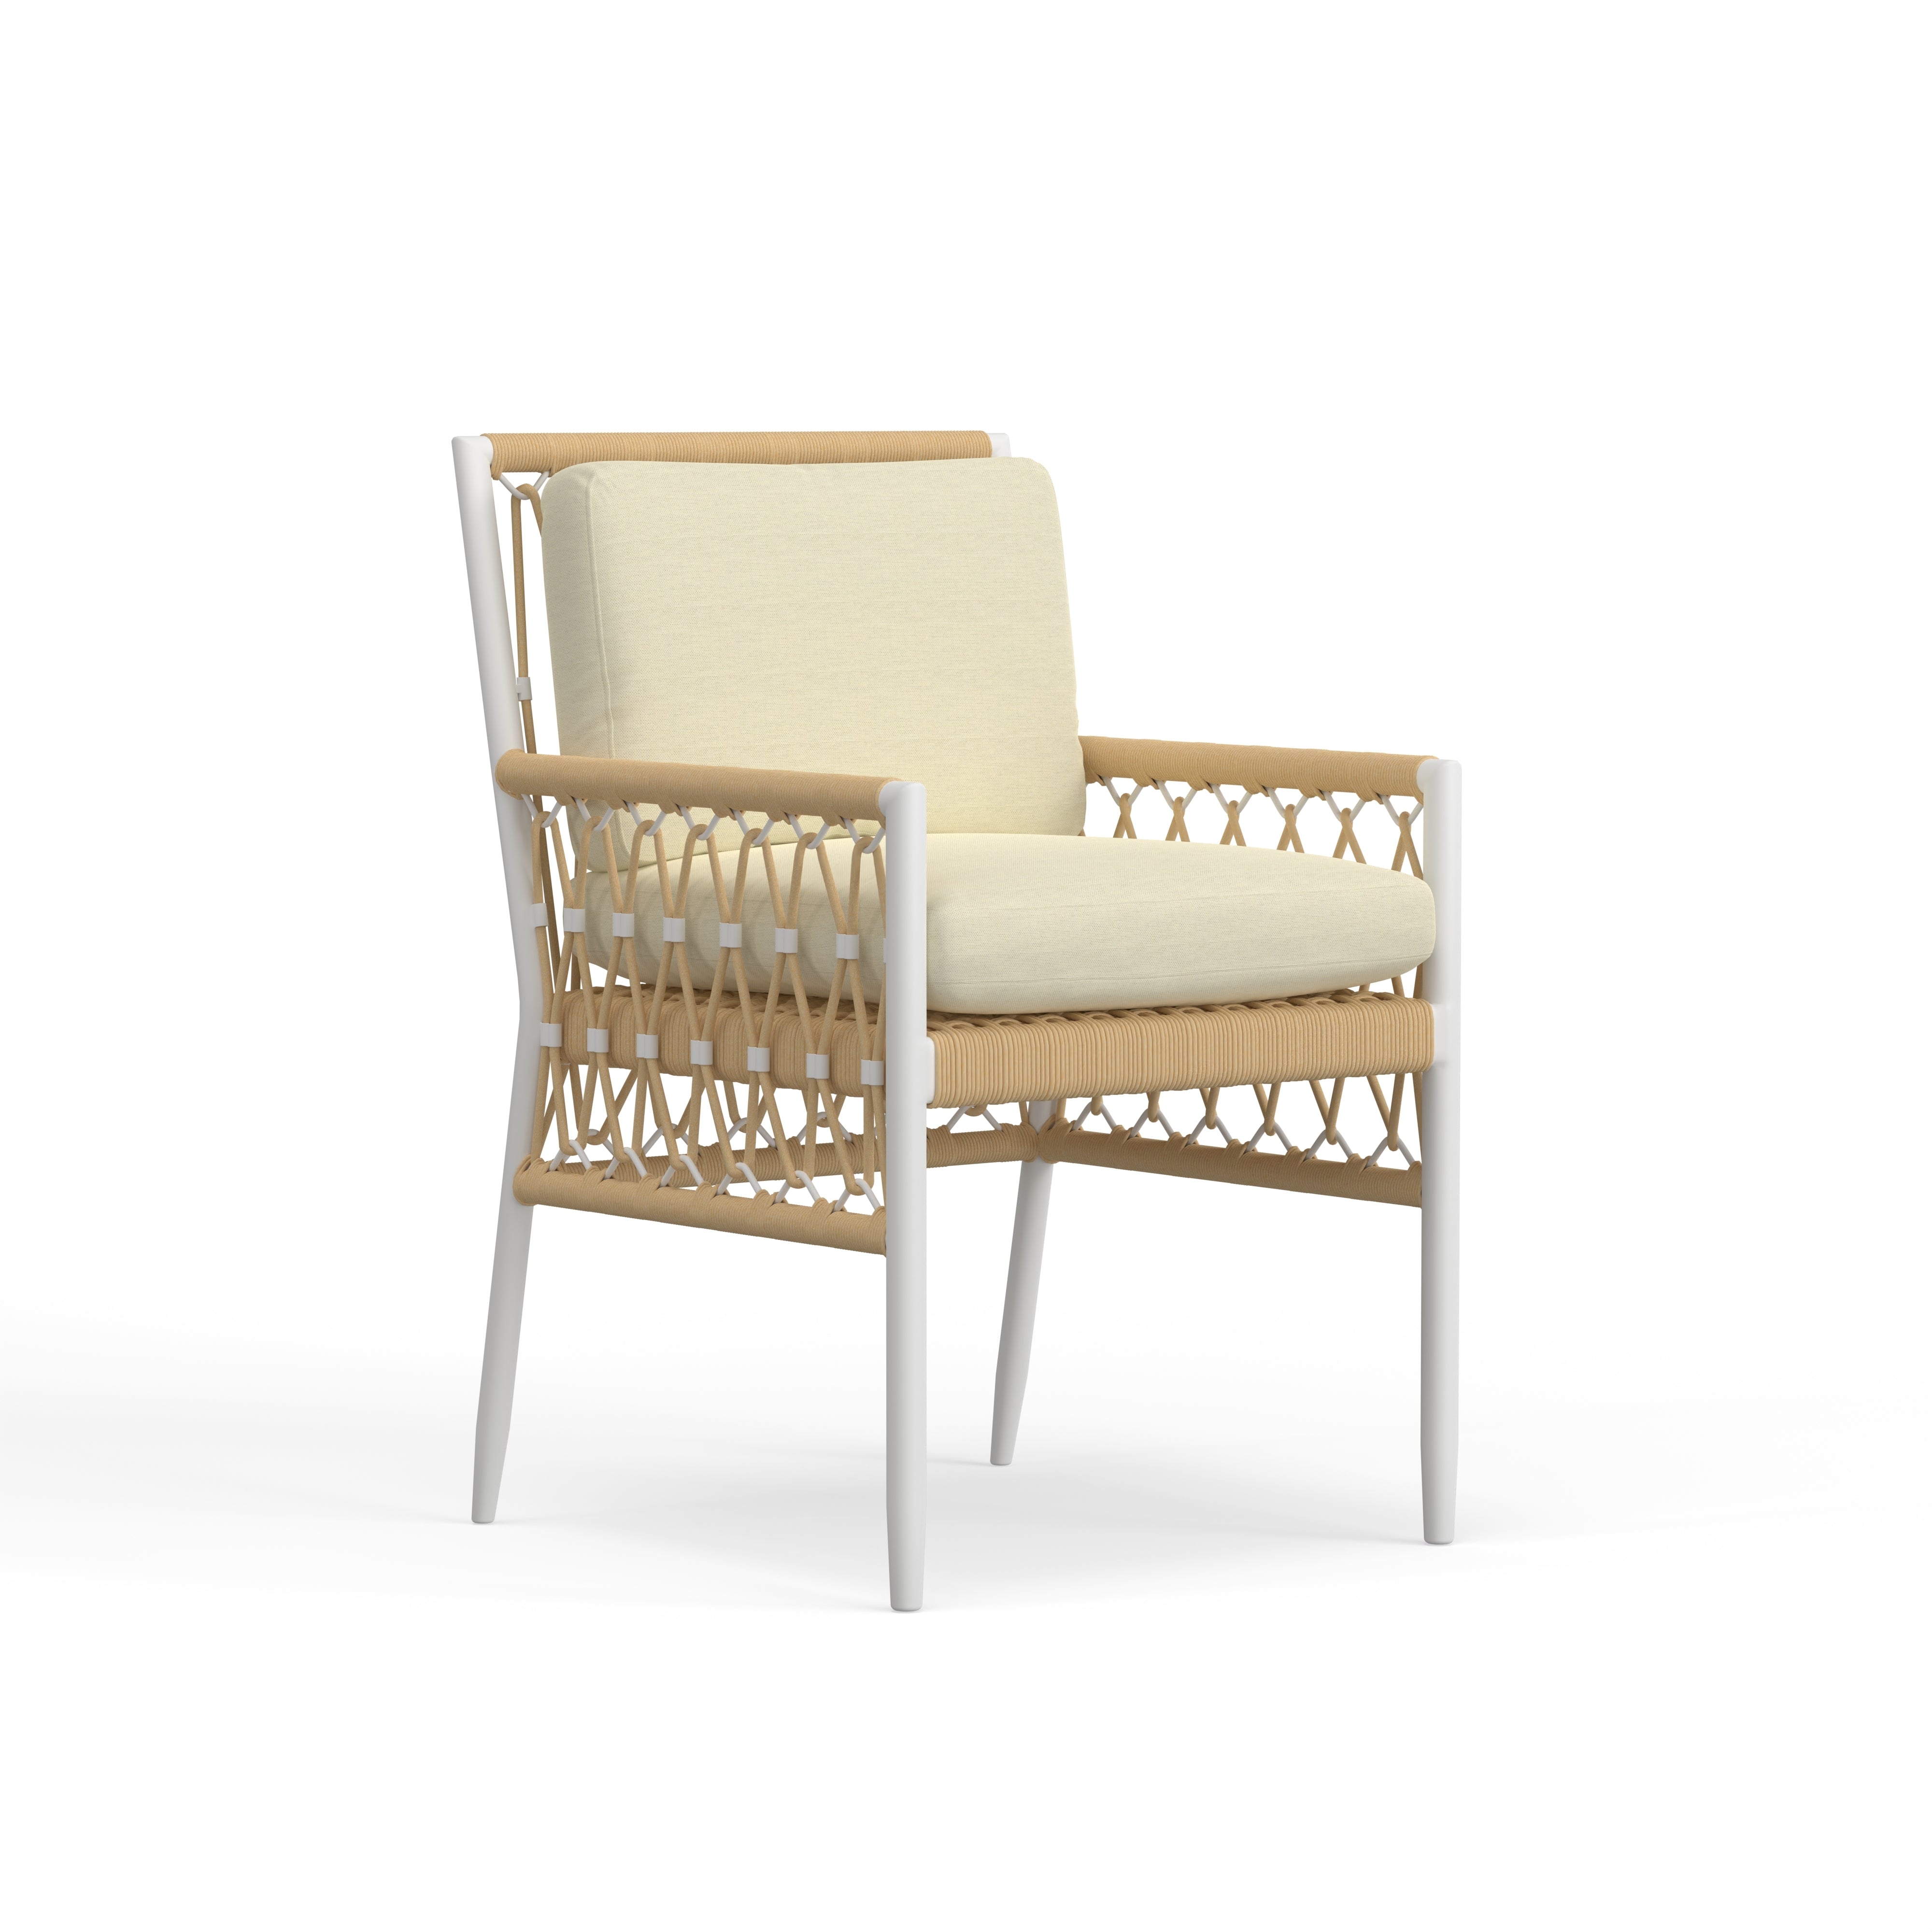 Contemporary White Aluminum Outdoor Chair